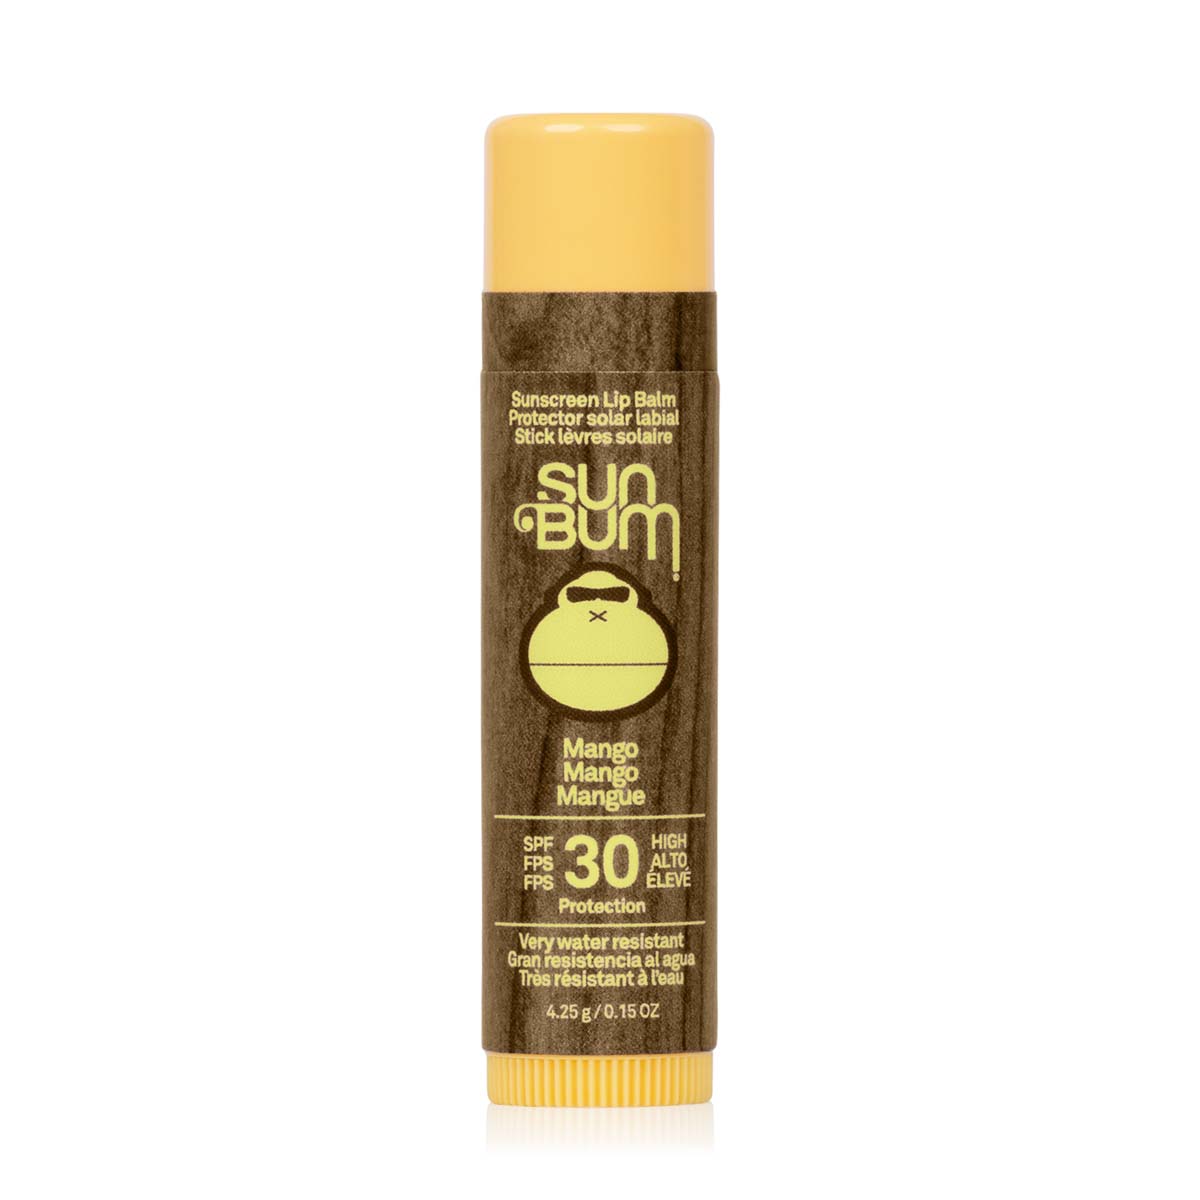 Sun Bum Original Spf30 Sunscreen Lip Balm - Mango 4.25G